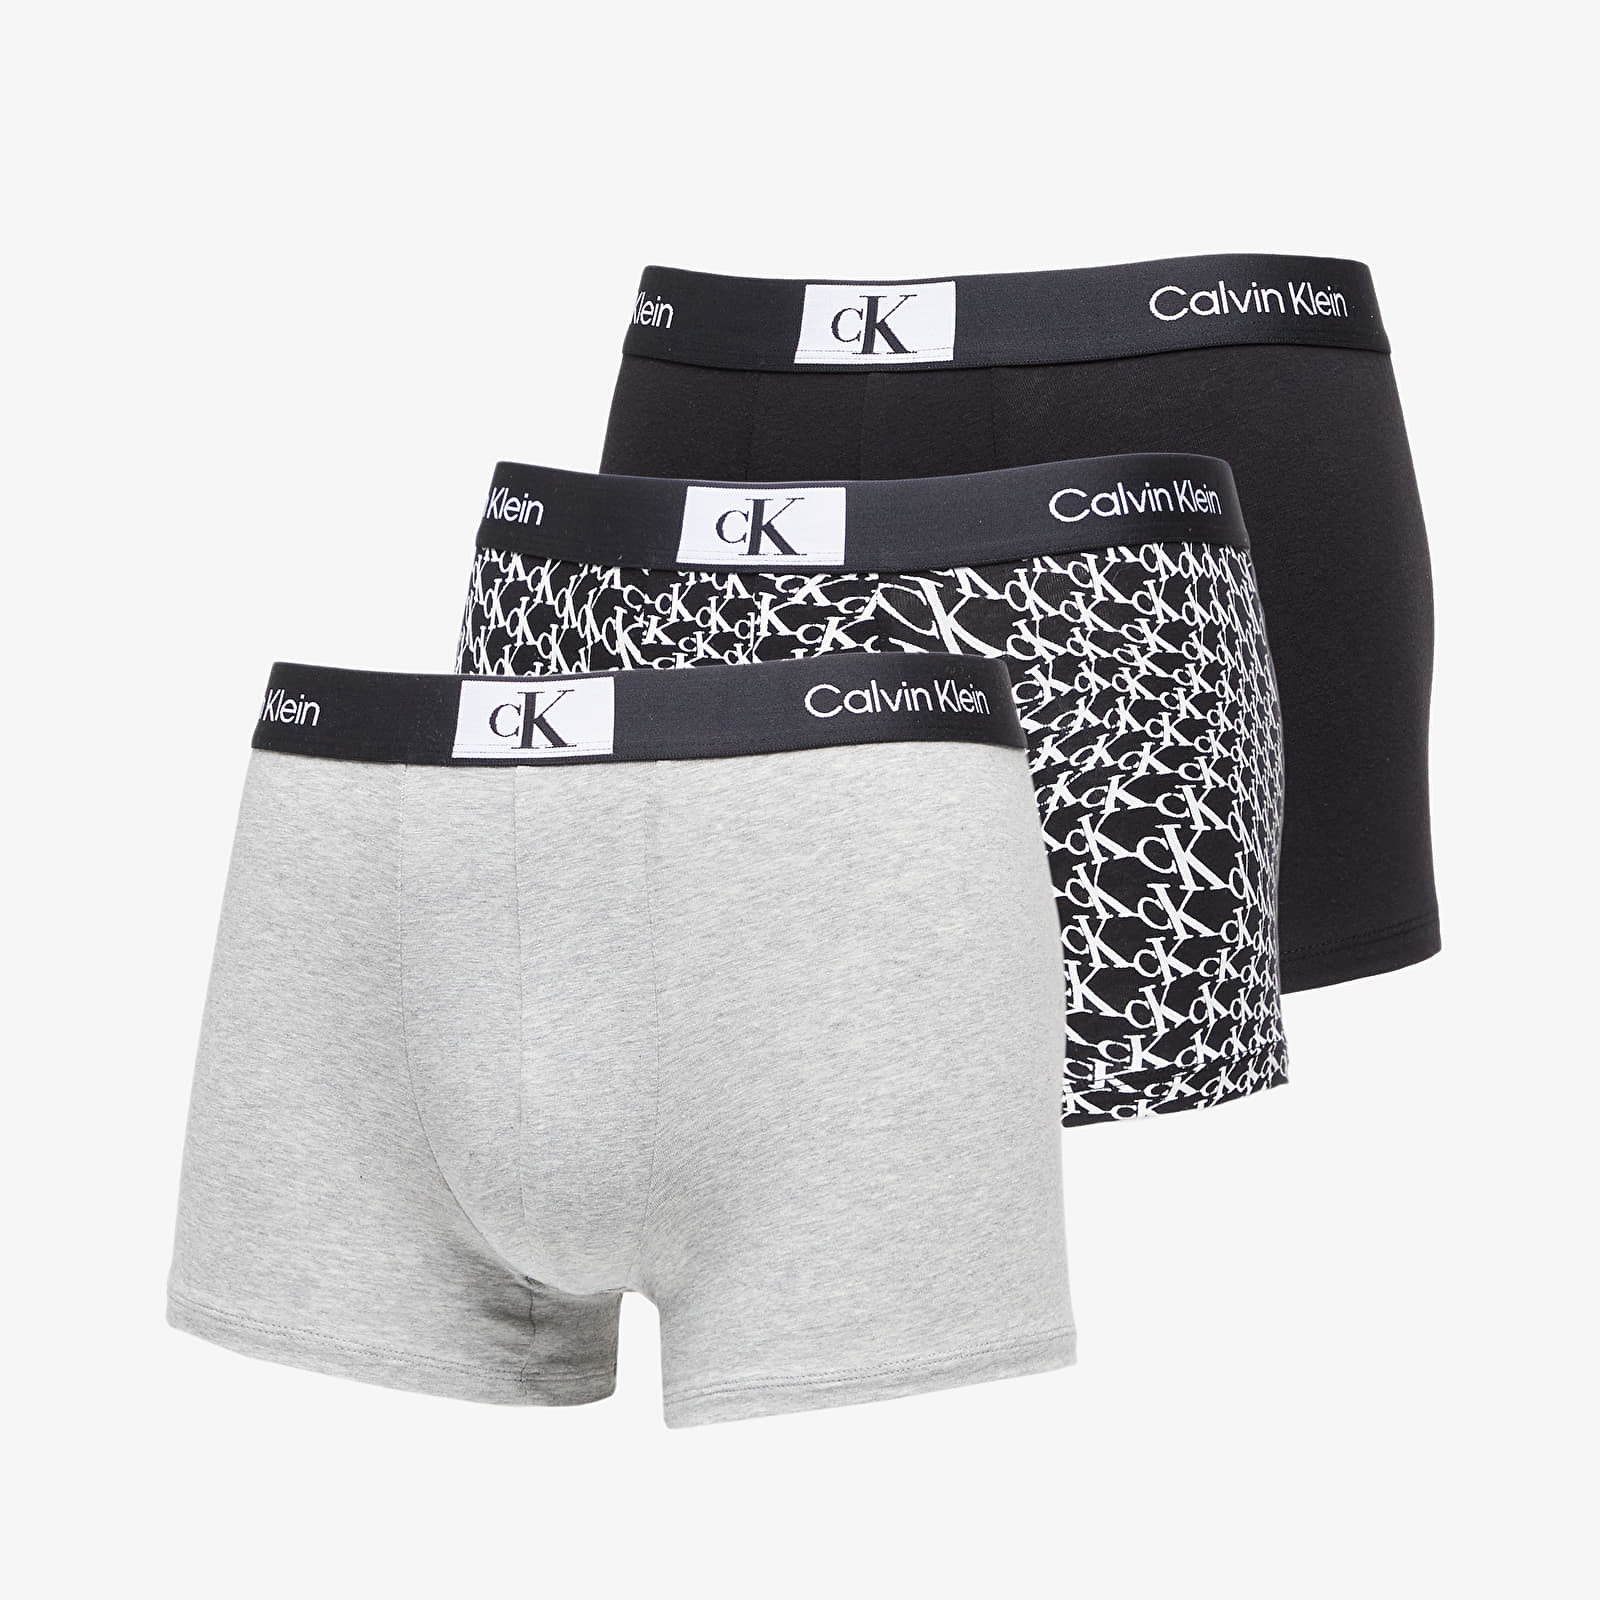 Boxer shorts Calvin Klein 96 Cotton Trunk 3-Pack Black/ Grey Heather/ Warped Logo Print Black